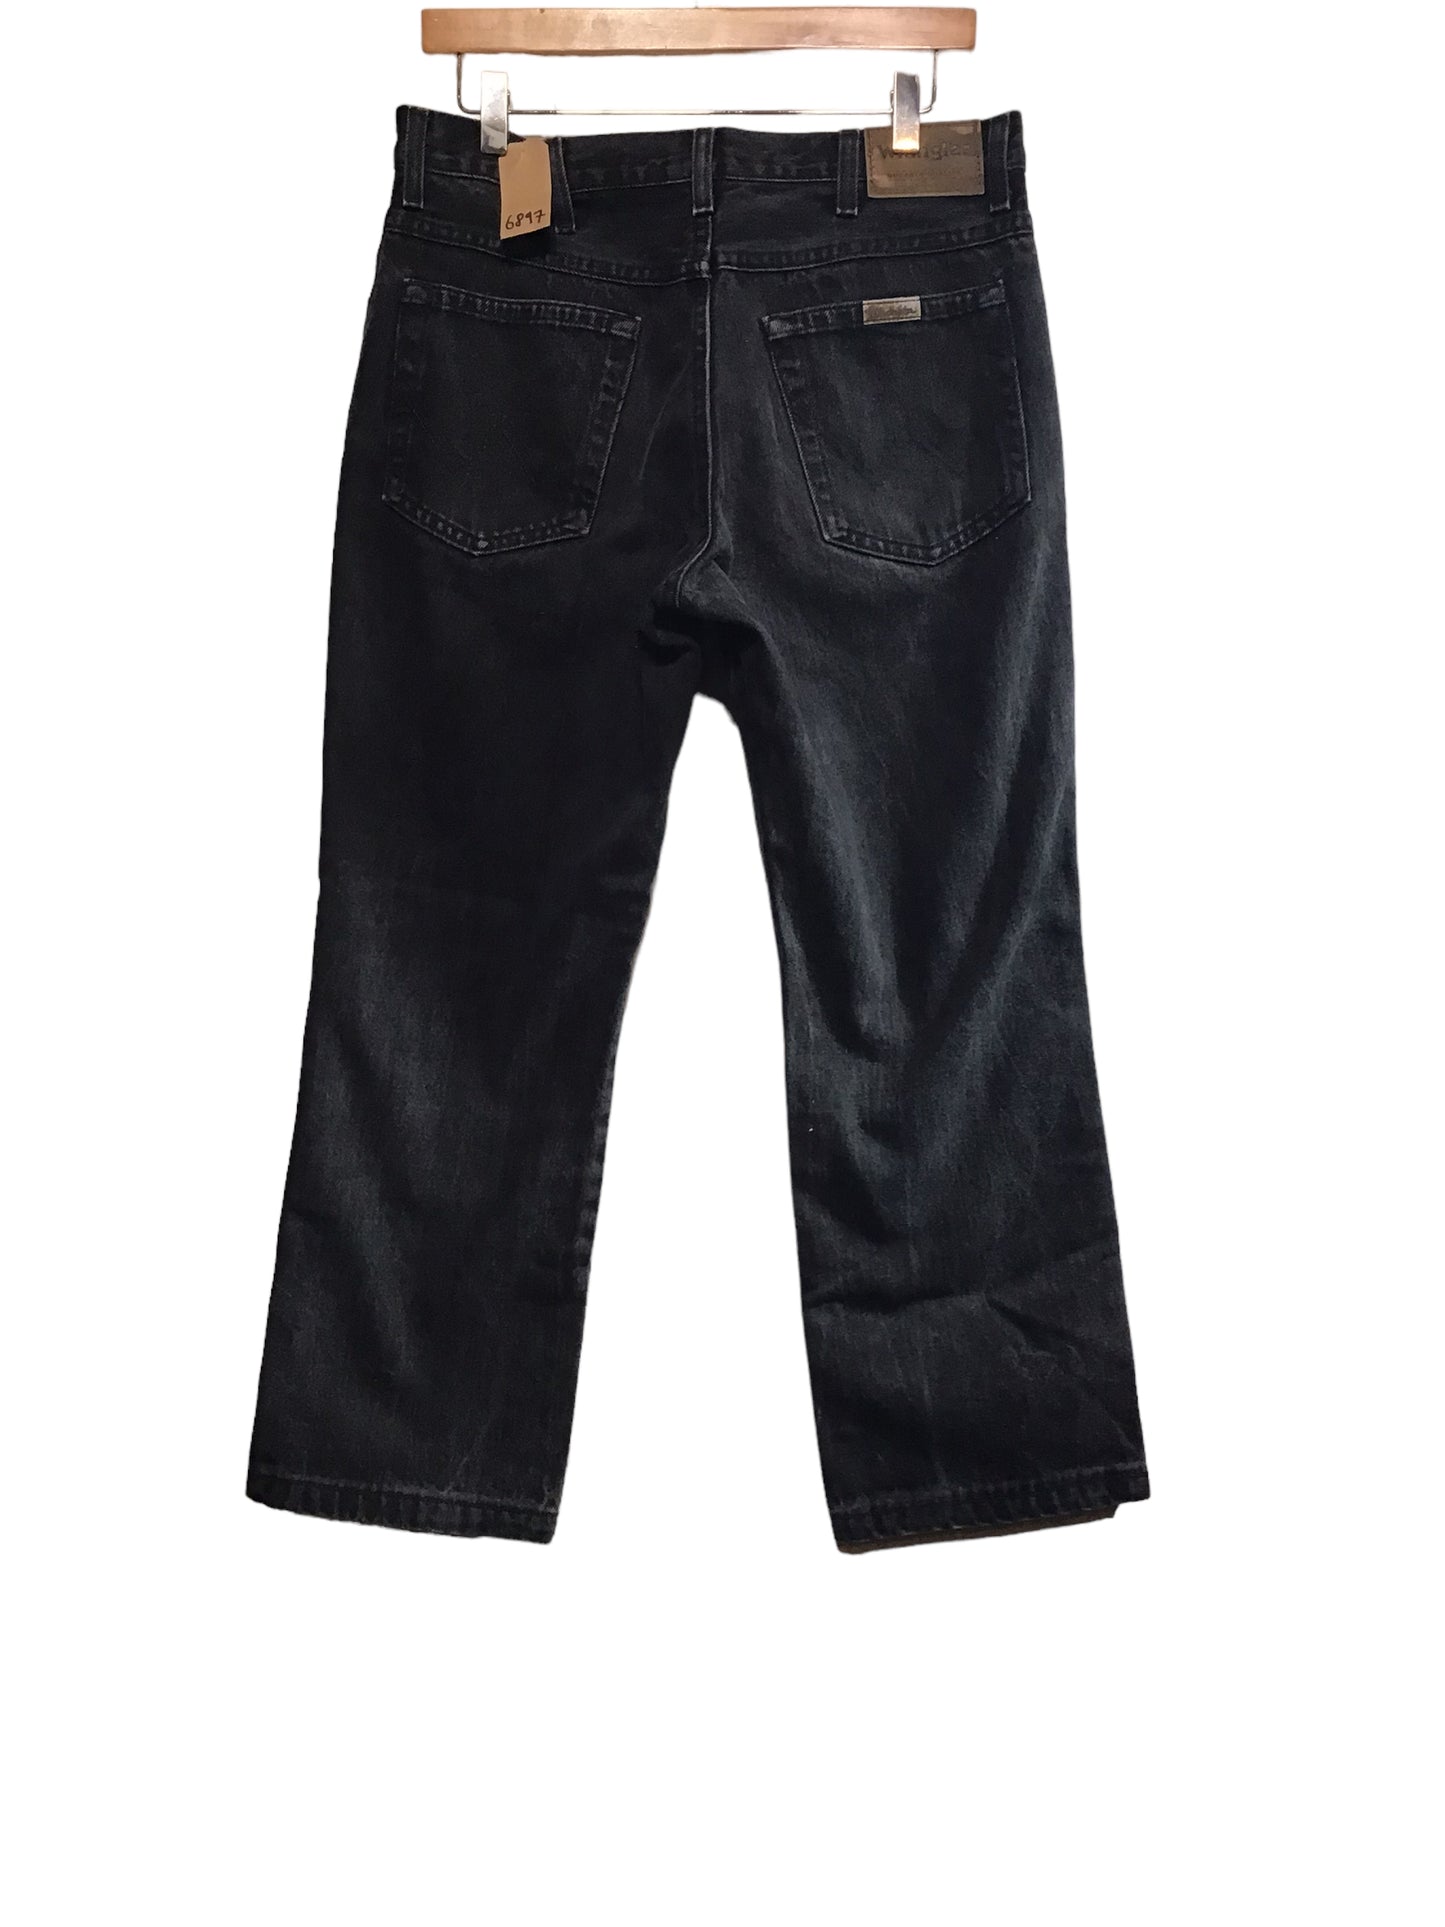 Wrangler Jeans (32x27)